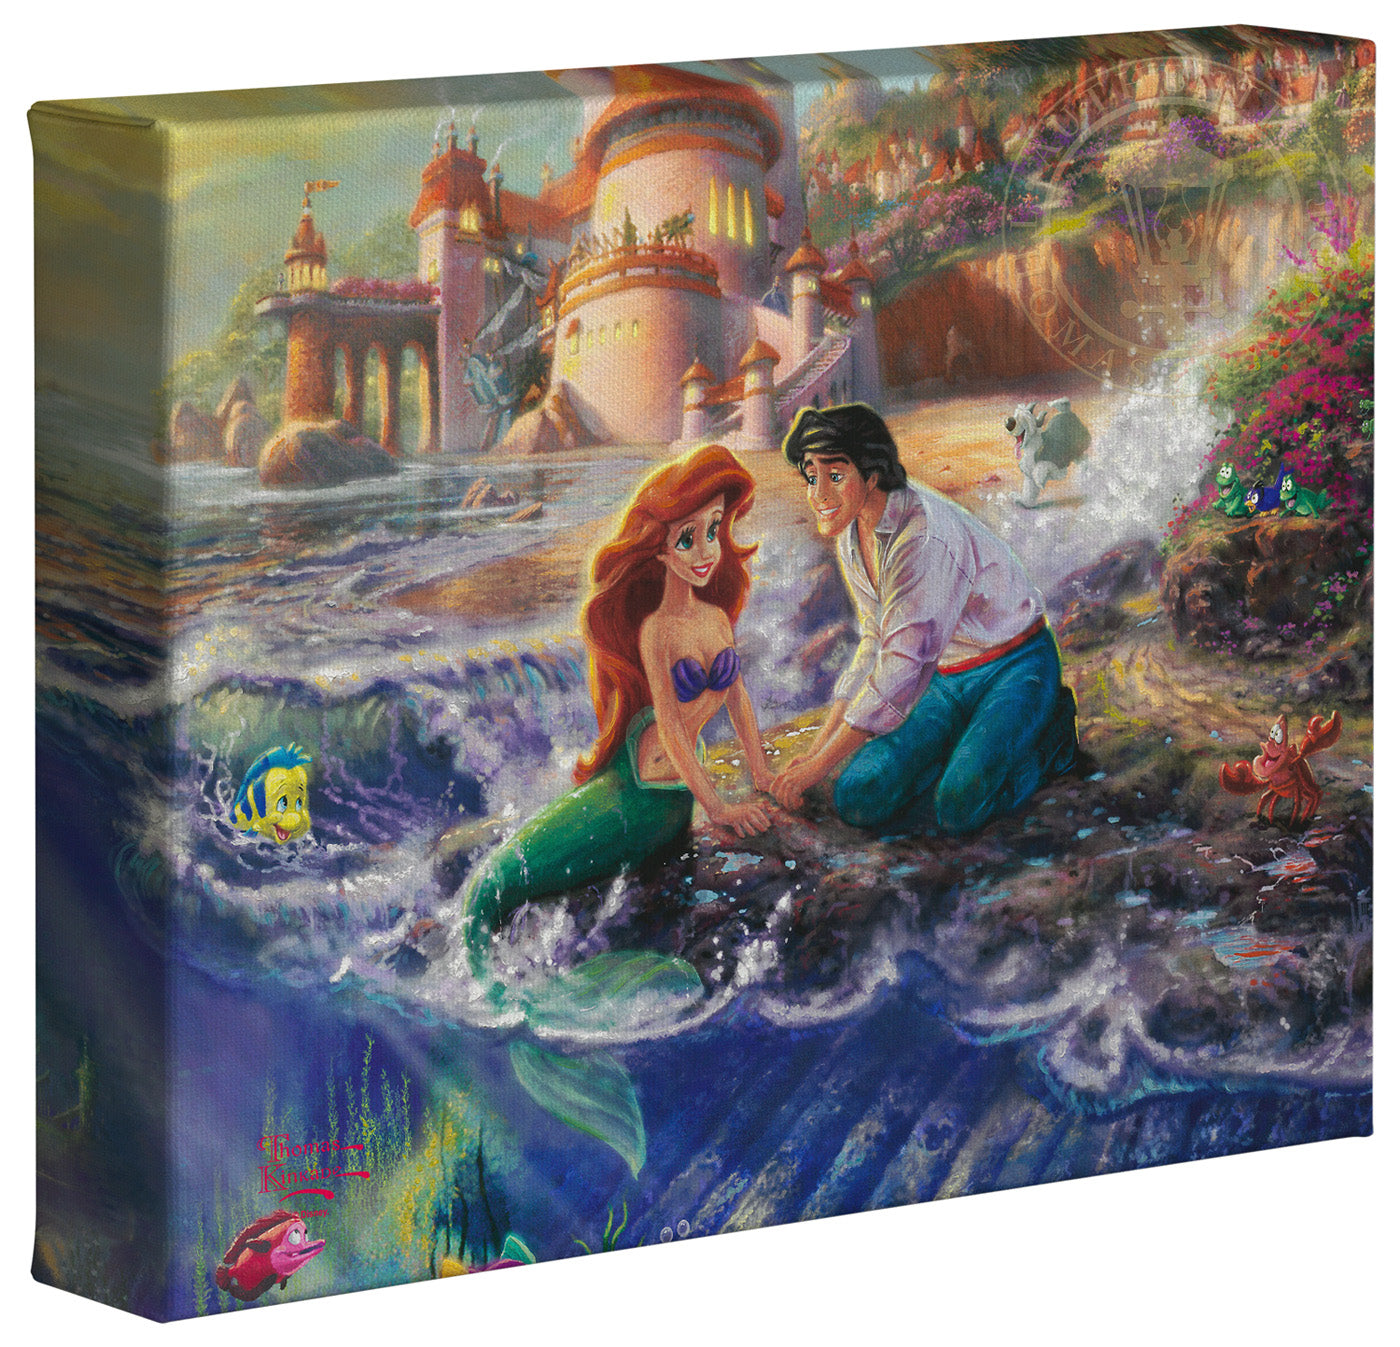 Disney Dreams Collection by Thomas Kinkade Little Mermaid -7X5 16